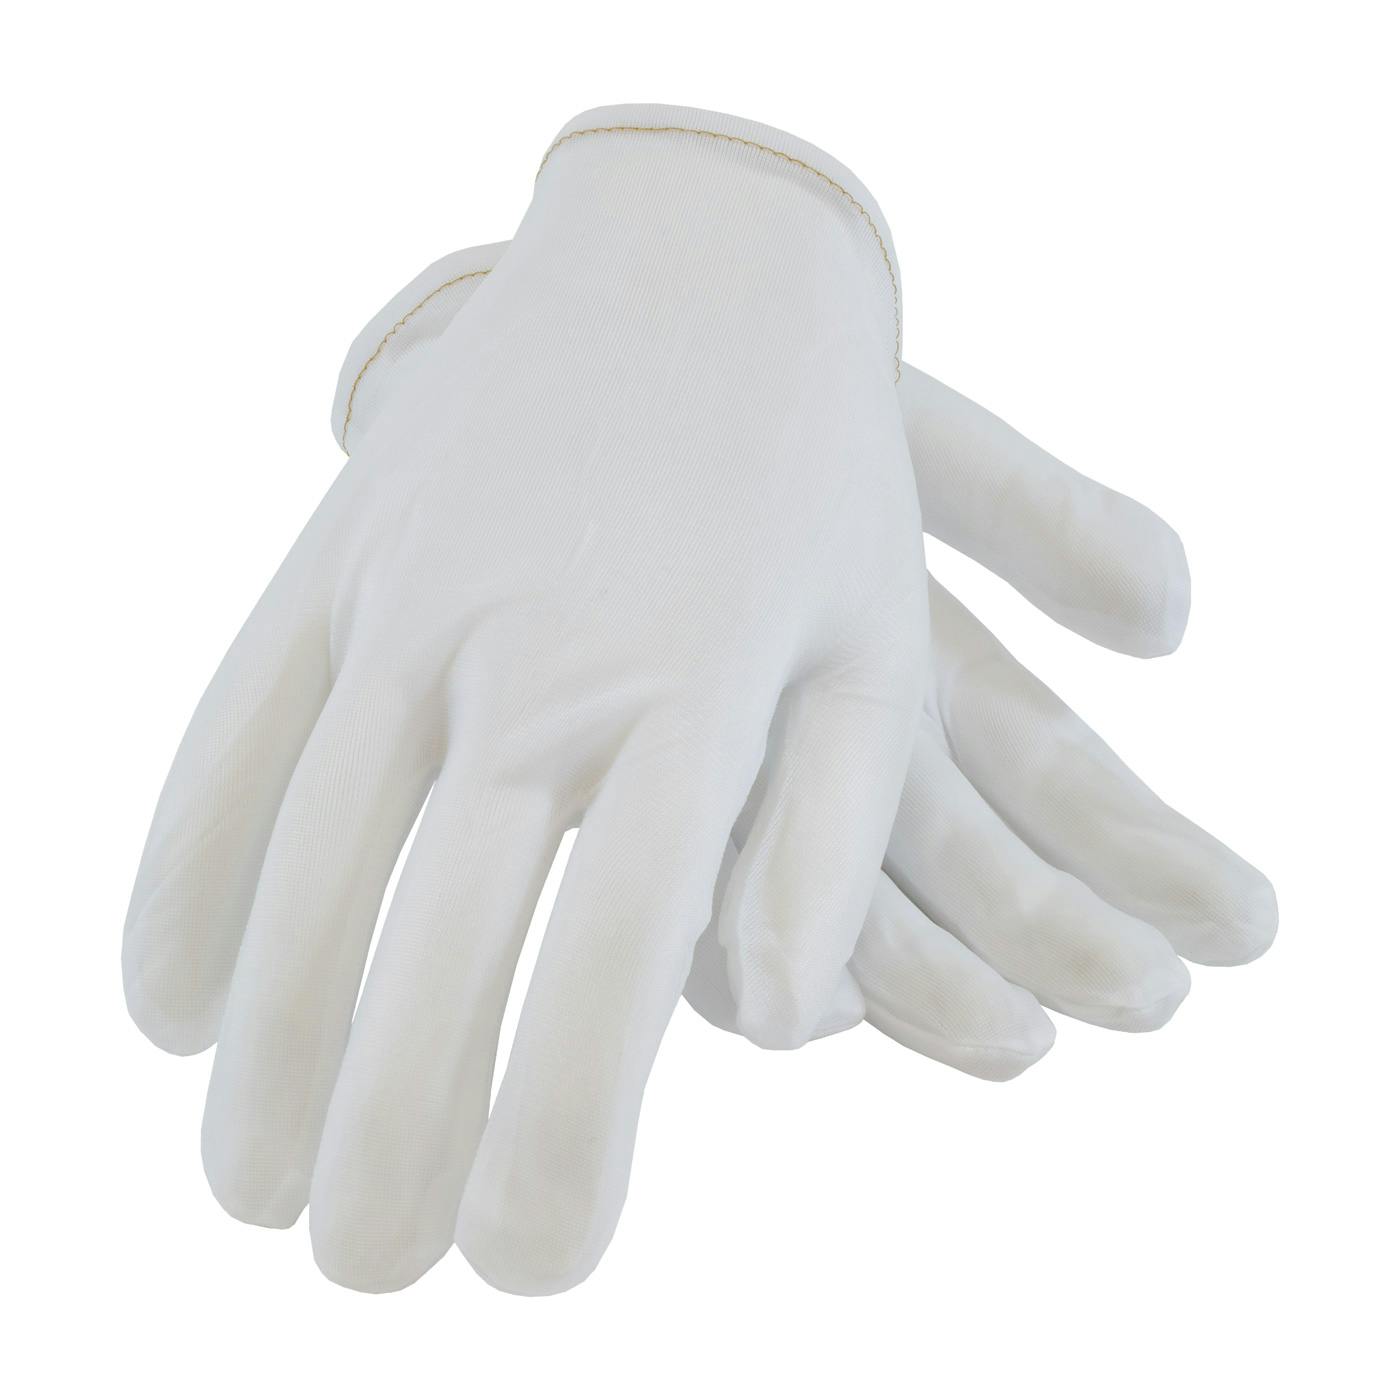 CleanTeam® 40 Denier Tricot Inspection Glove with Rolled Hem Cuff - Ladies' (98-741)